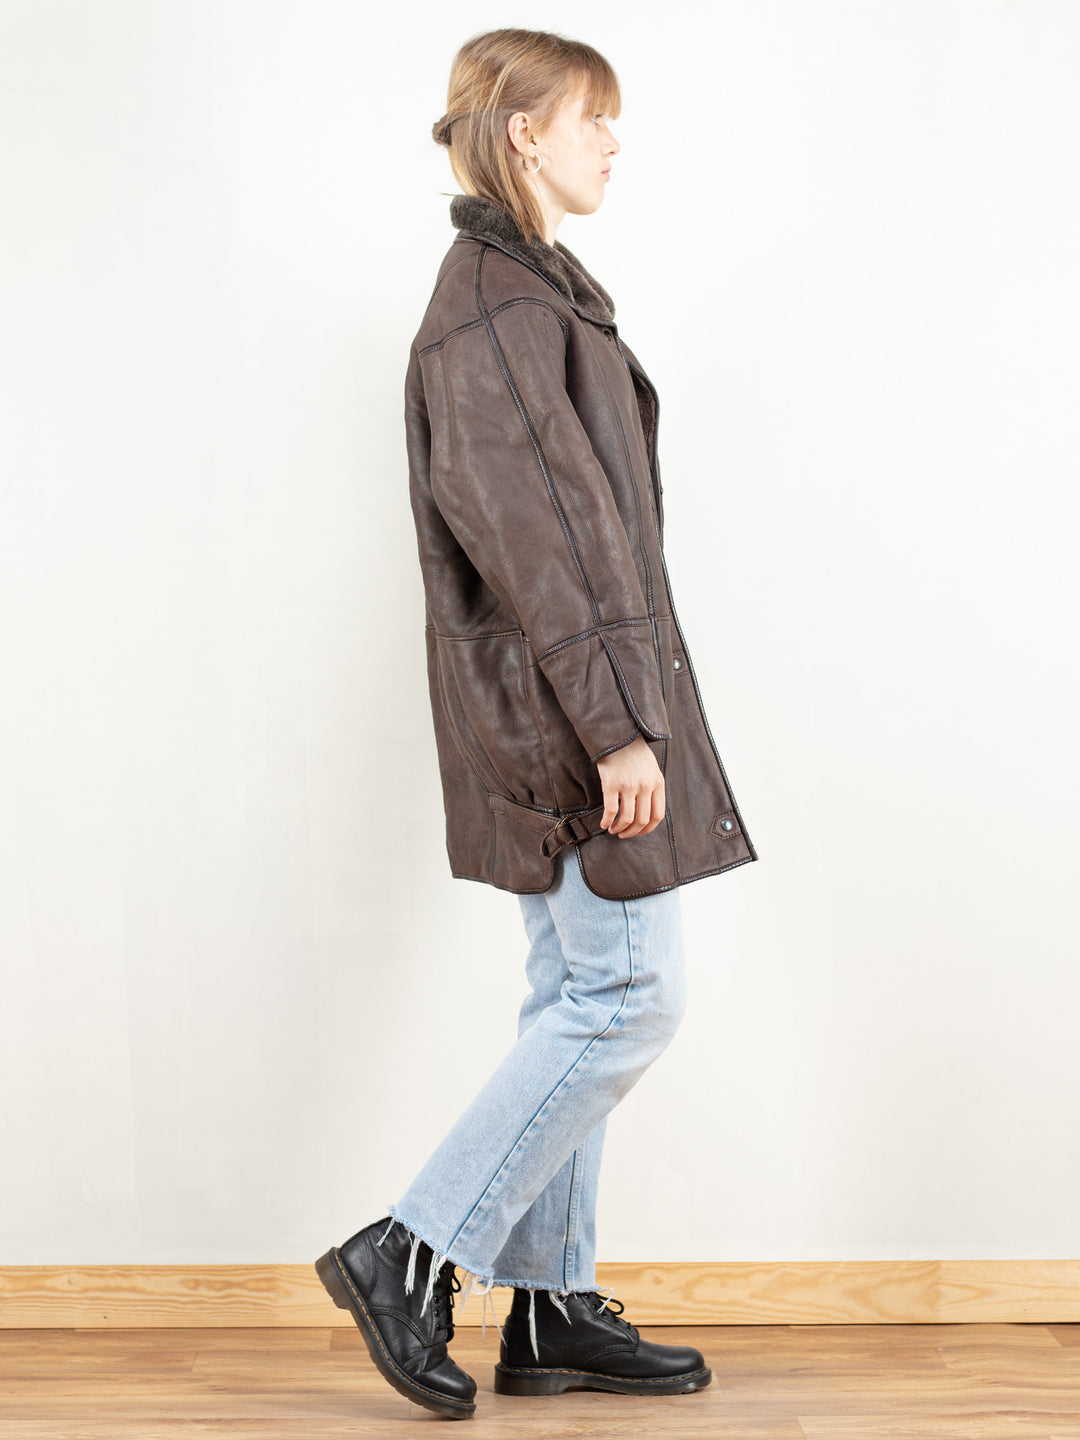 Leather Shearling Coat suede vintage 70s afghan winter outerwear sheep fur coat retro penny lane jacket vintage clothing size large